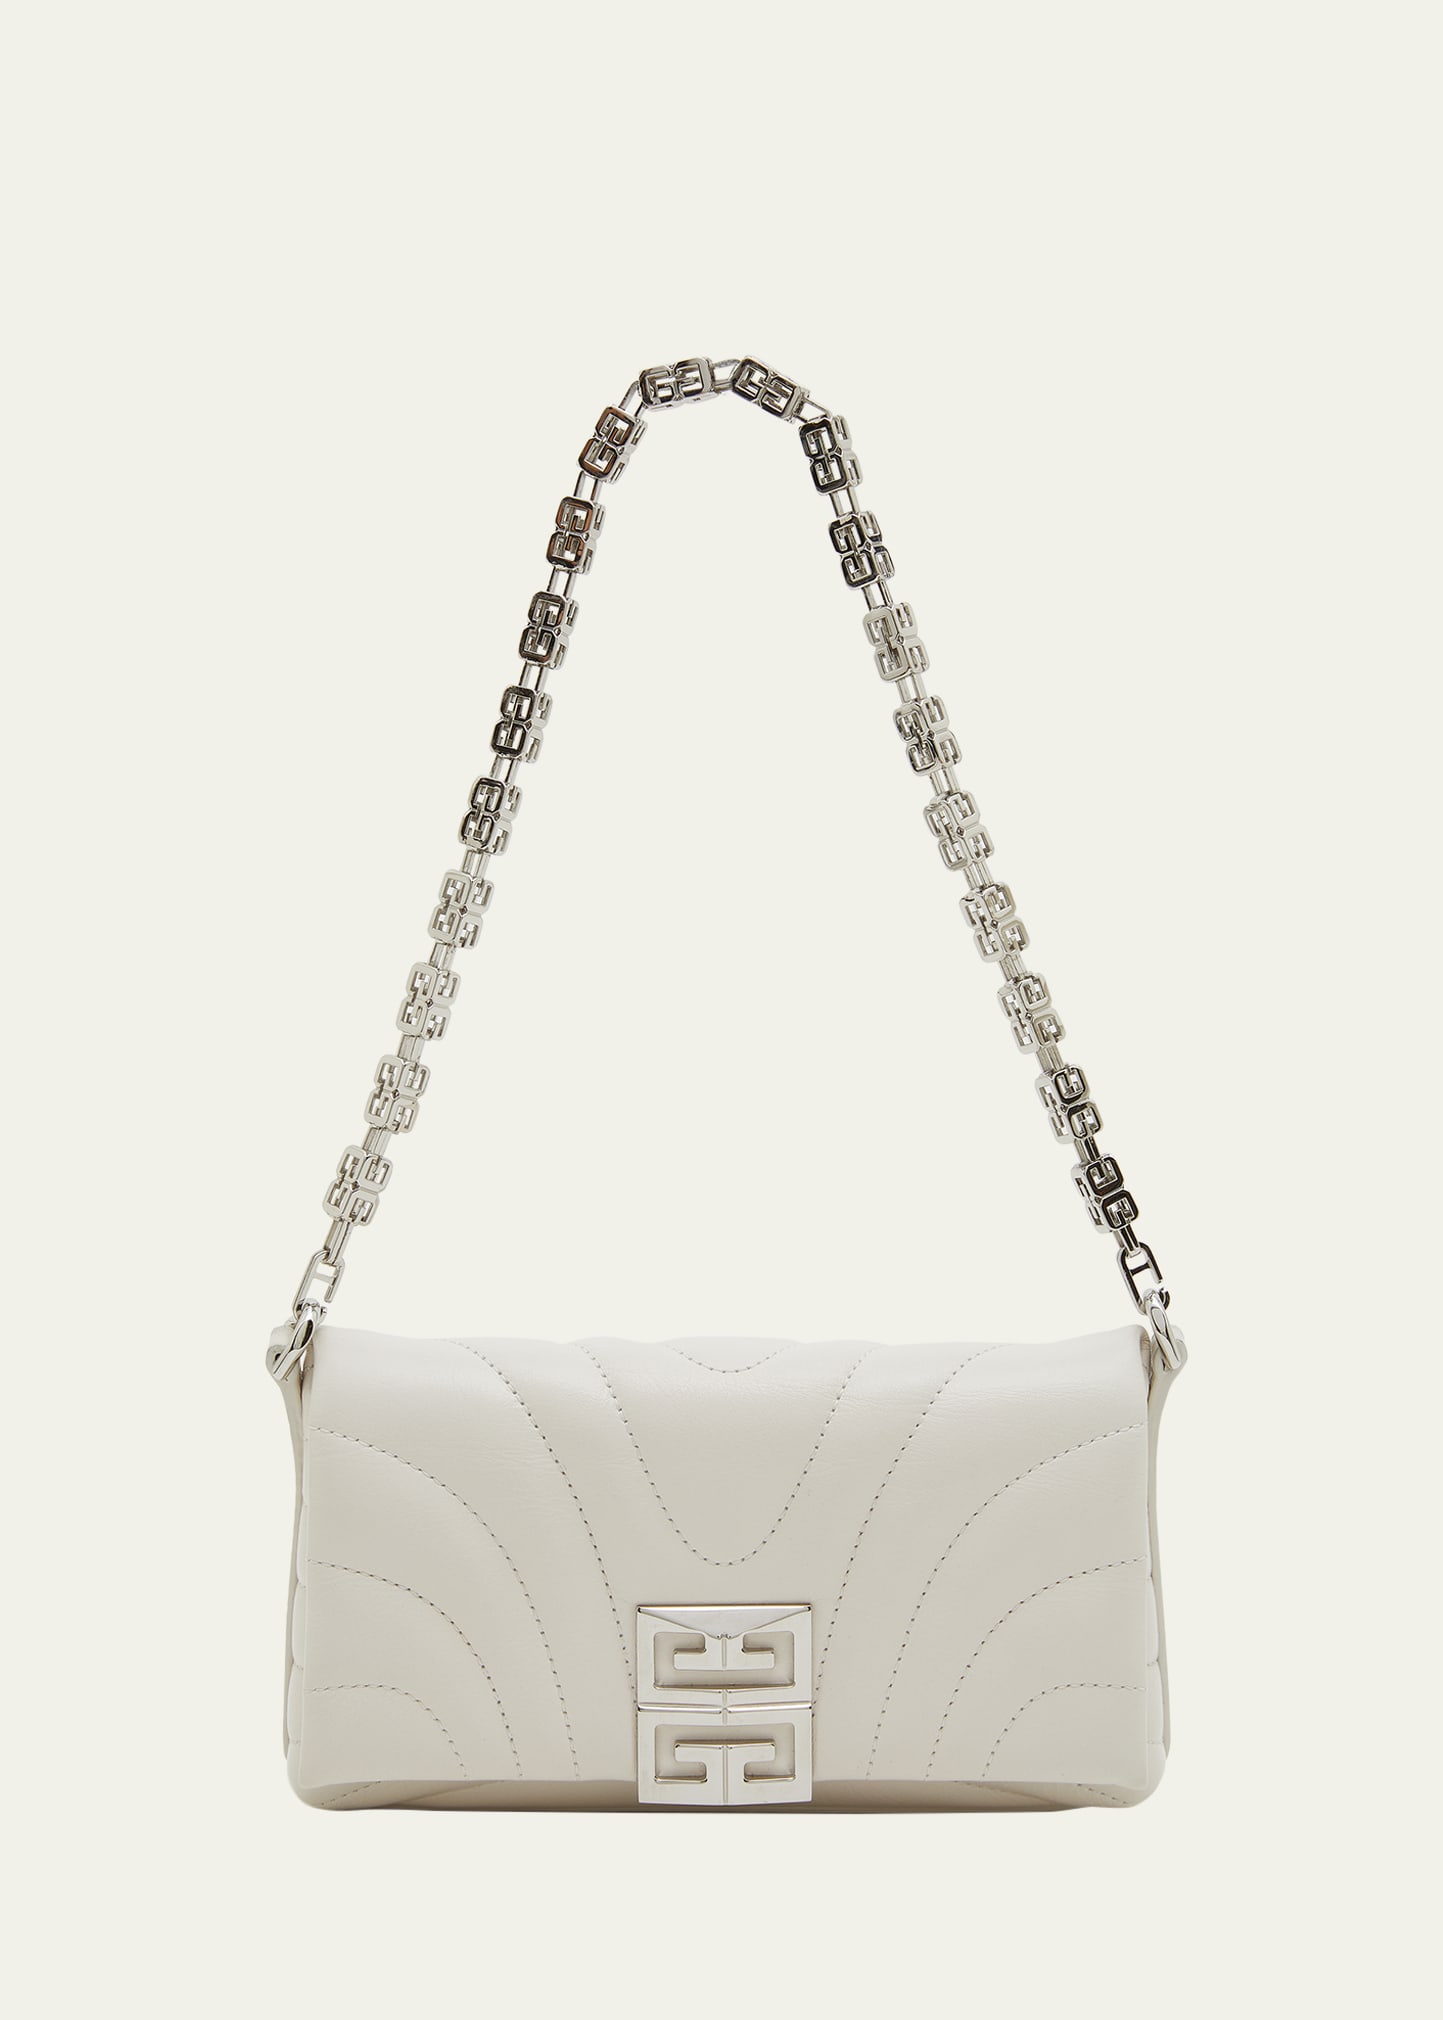 Trendy Handbags : Suede & Top Handle Handbags at Bergdorf Goodman